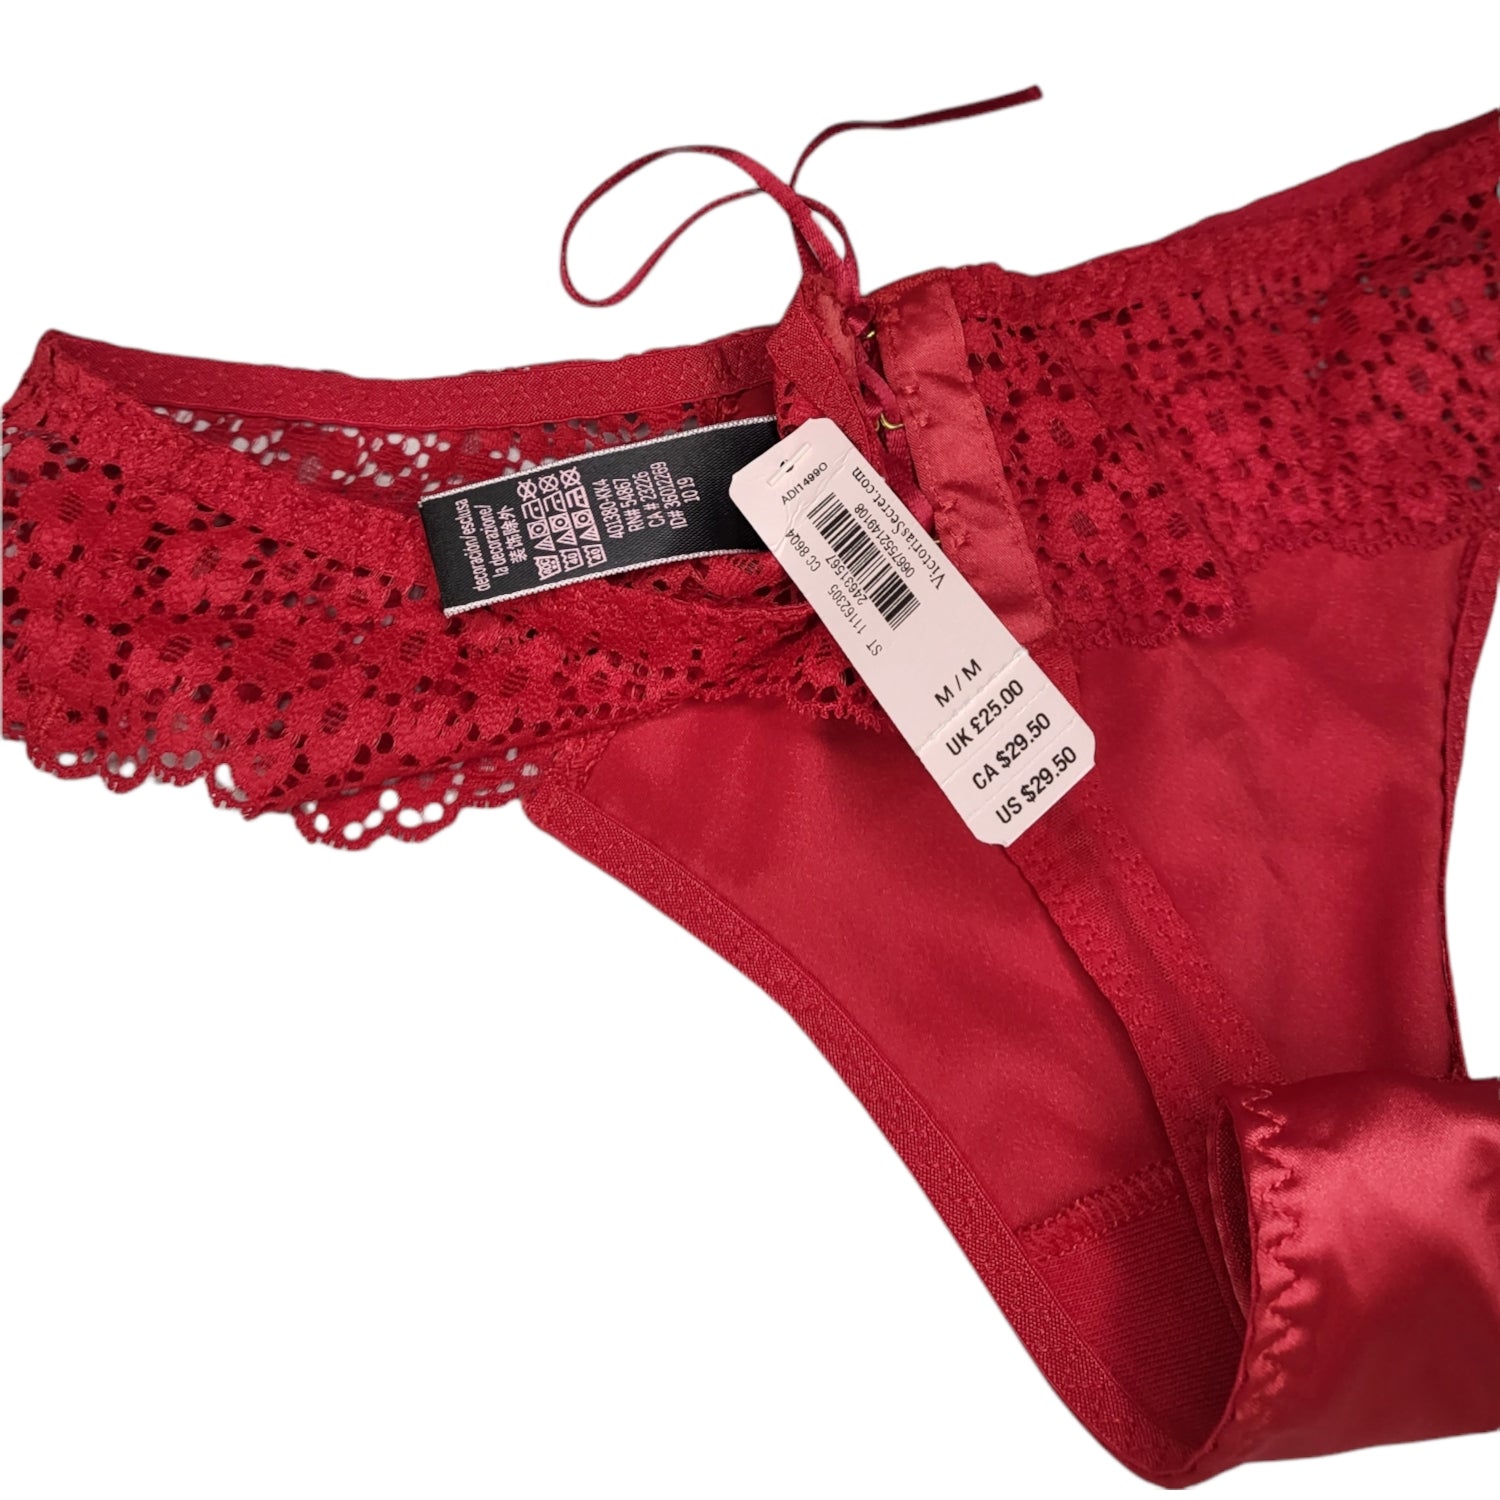 Victoria's Secret, Intimates & Sleepwear, Victorias Secret Mesh Corset Red